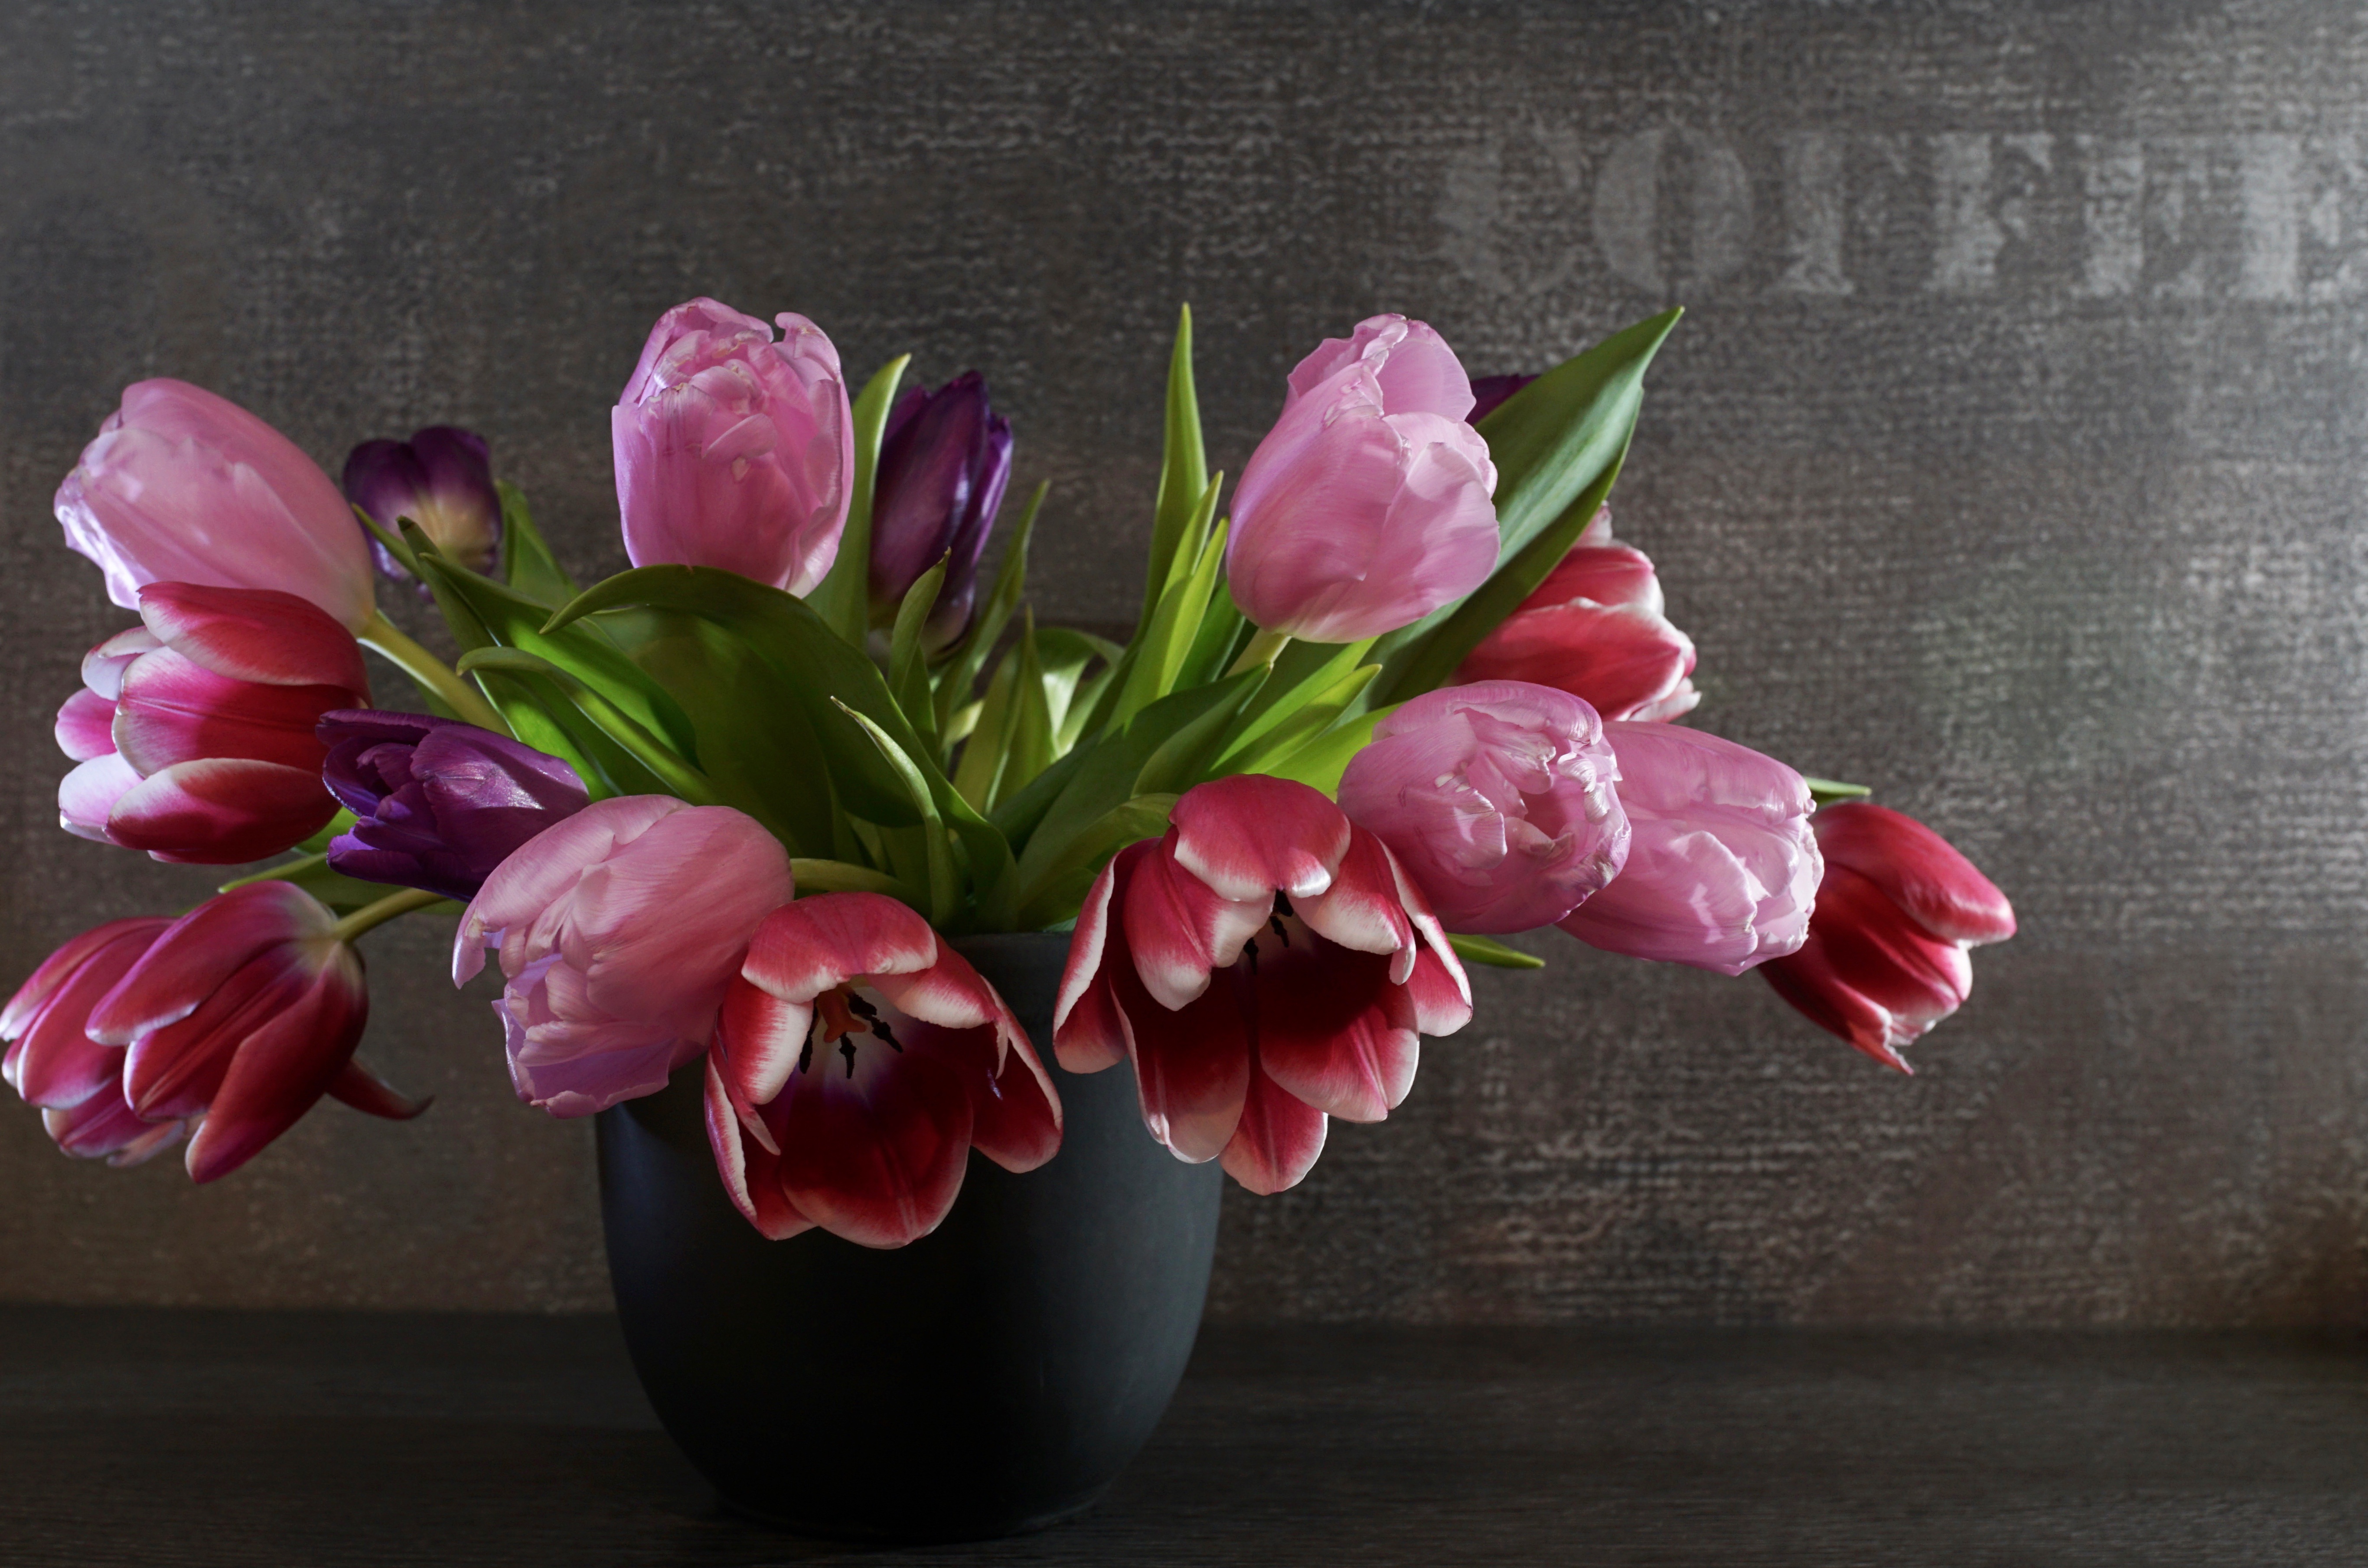 Фото тюльпаны в вазе на столе. Тюльпаны в вазе. Букет тюльпанов в вазе. Ваза с тюльпанами. Тюльпаны в вазах.